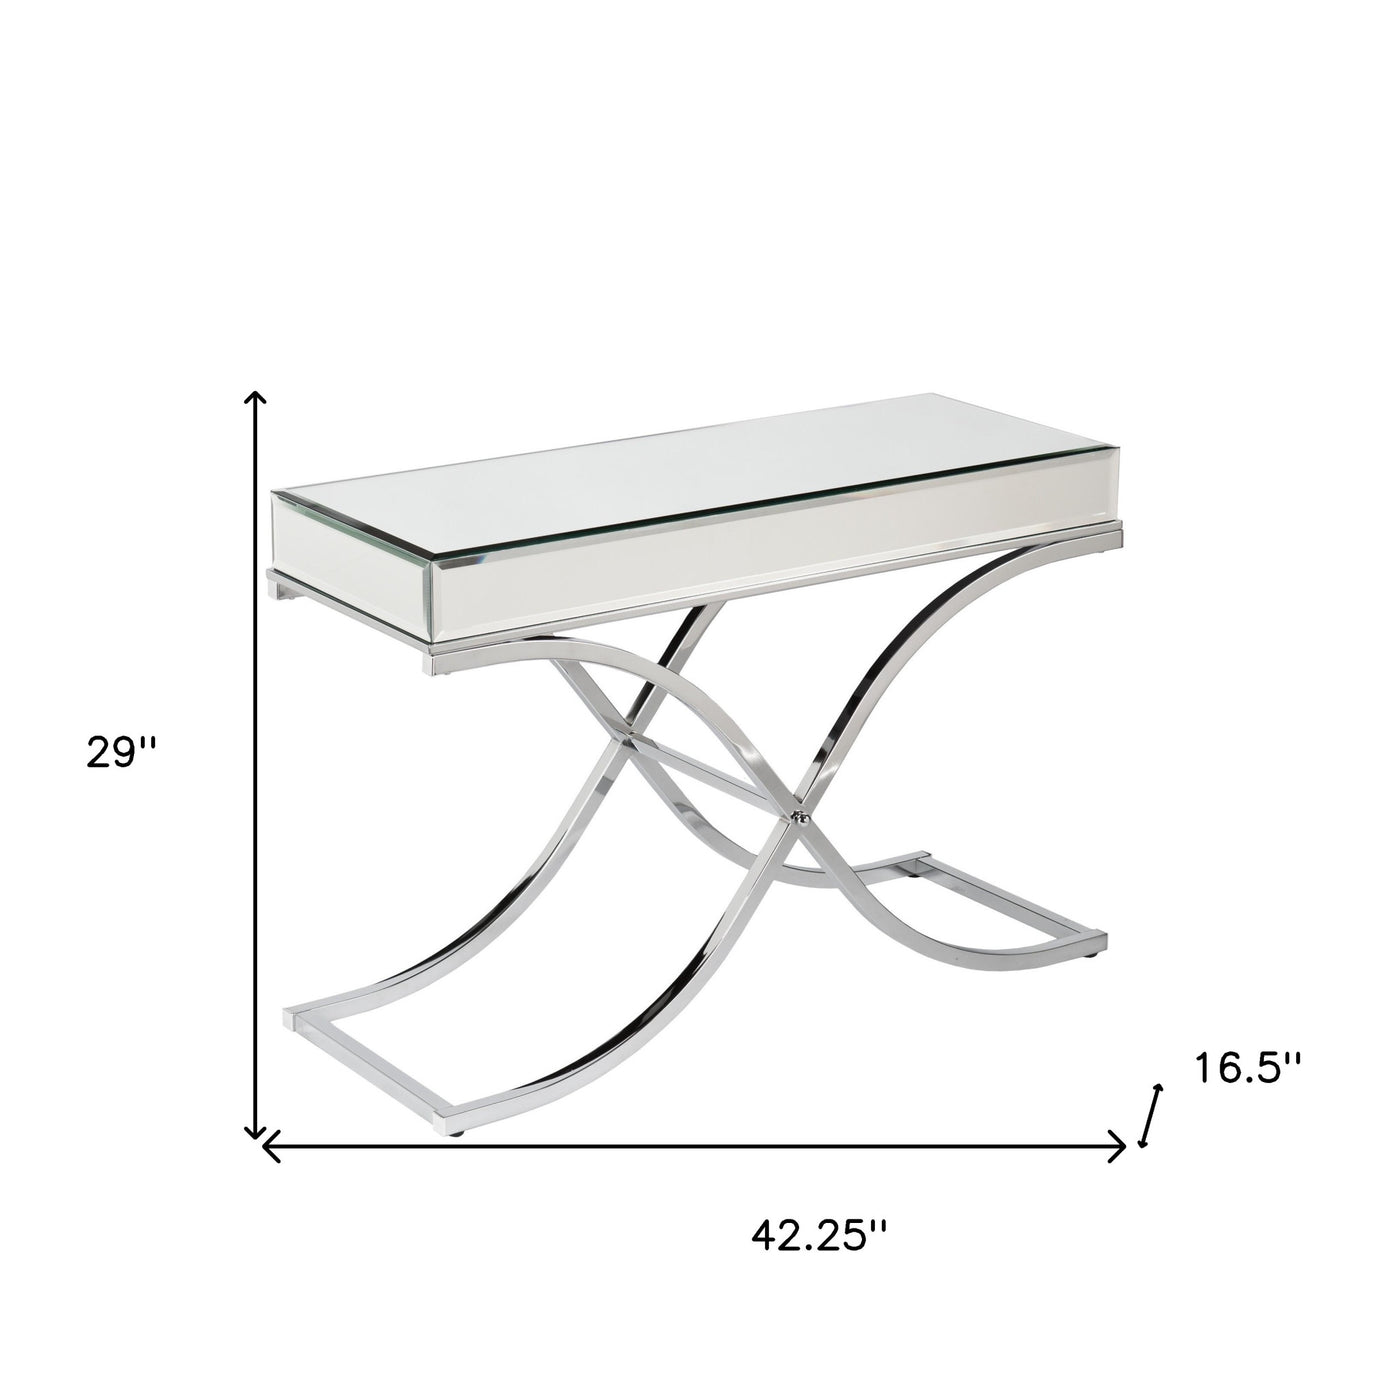 42" Silver Mirrored Glass Cross Leg Console Table